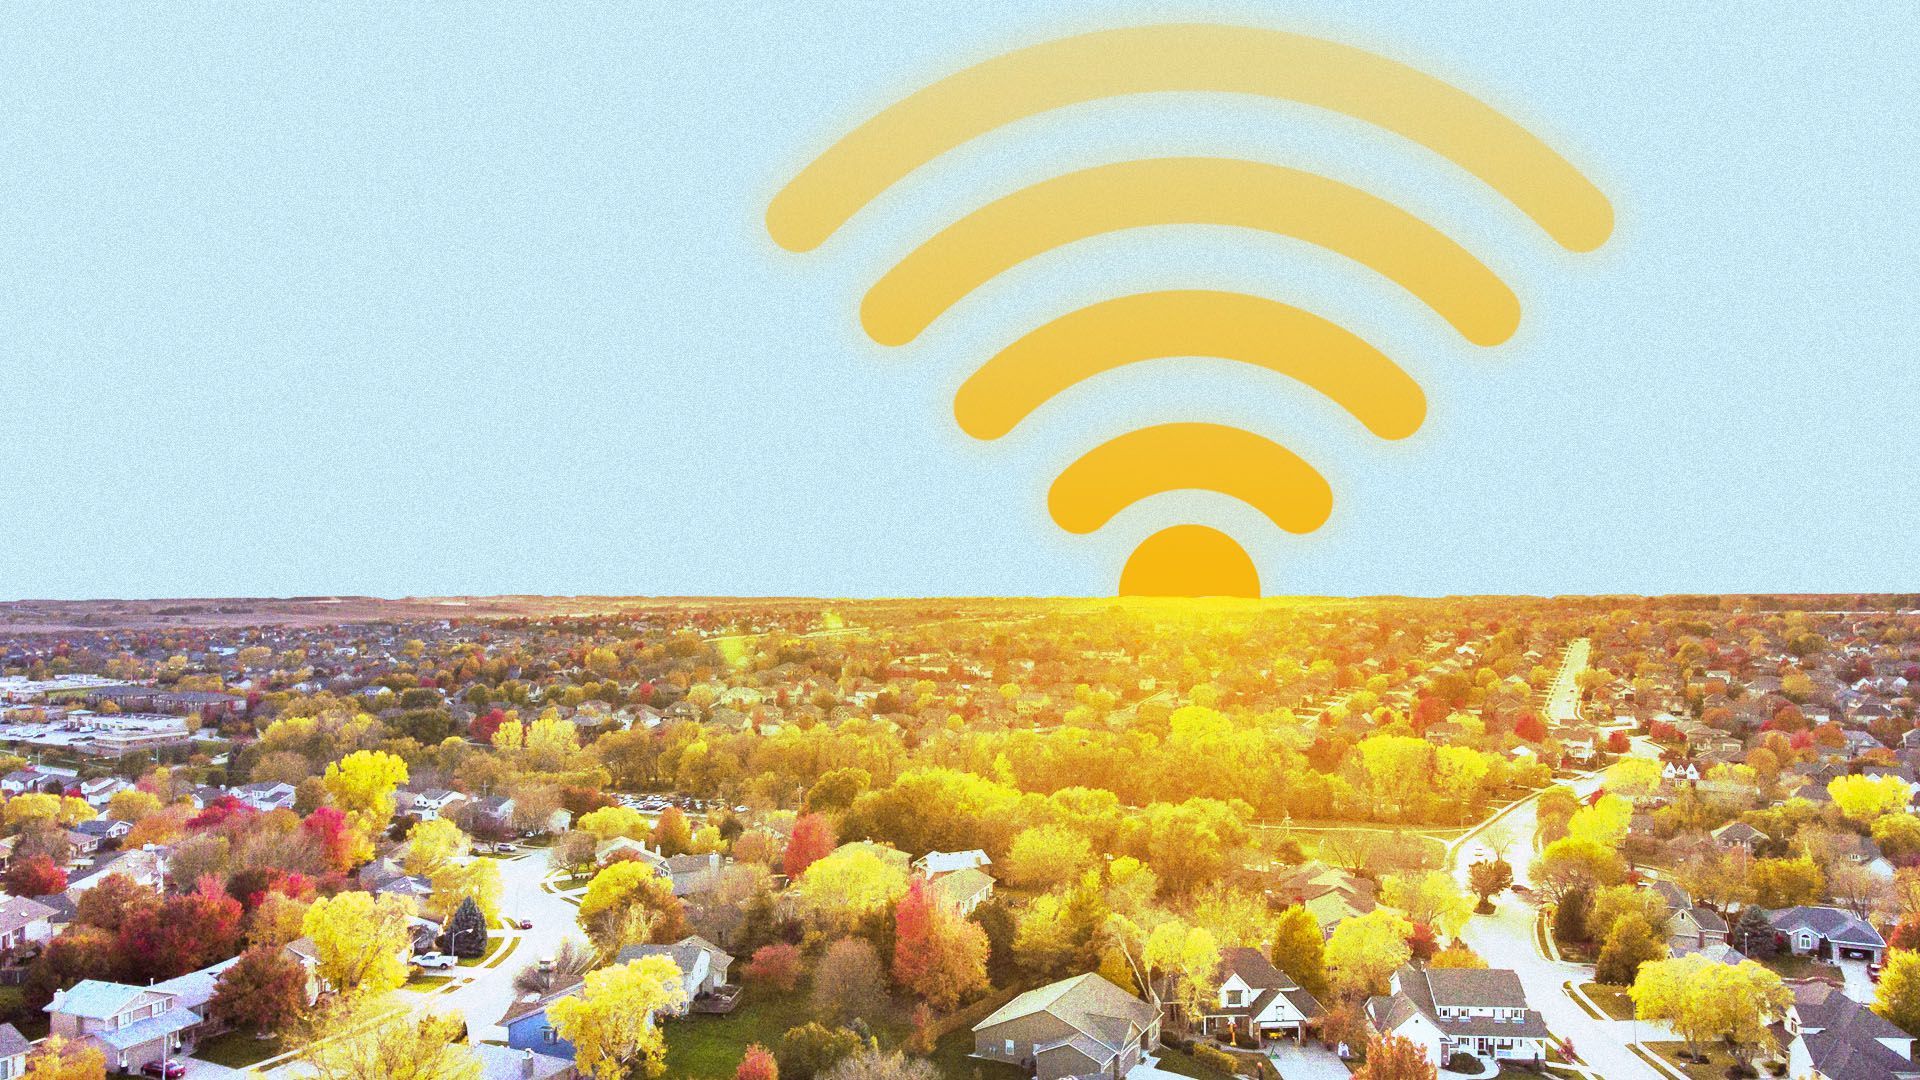 Illustration of a wifi signal over a neighborhood